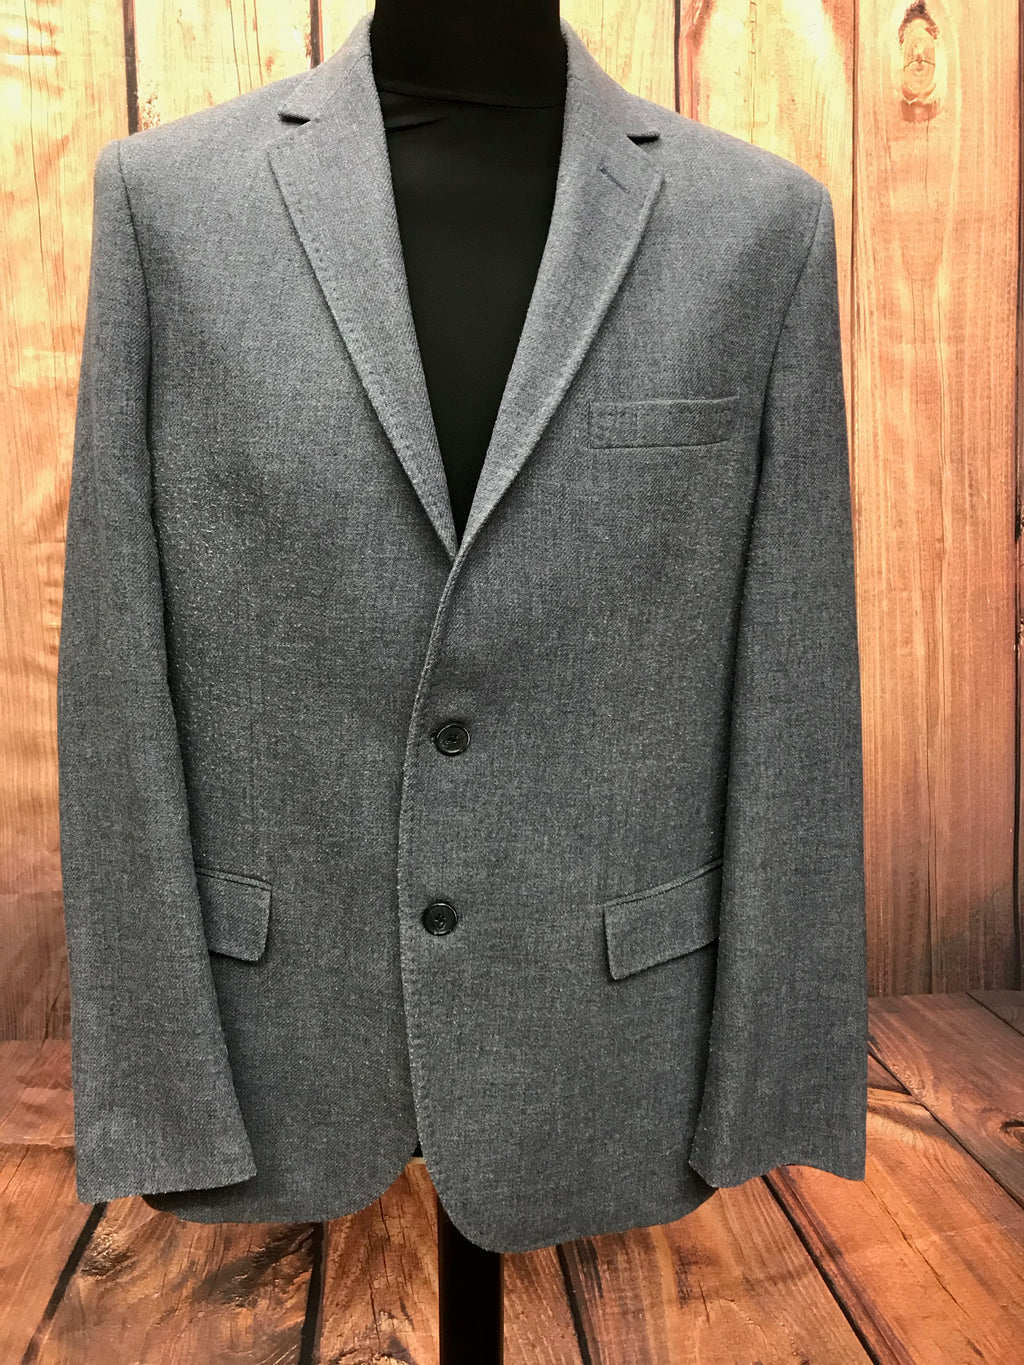 Herren Vintage Tweed Jacke Blazer Gr.50